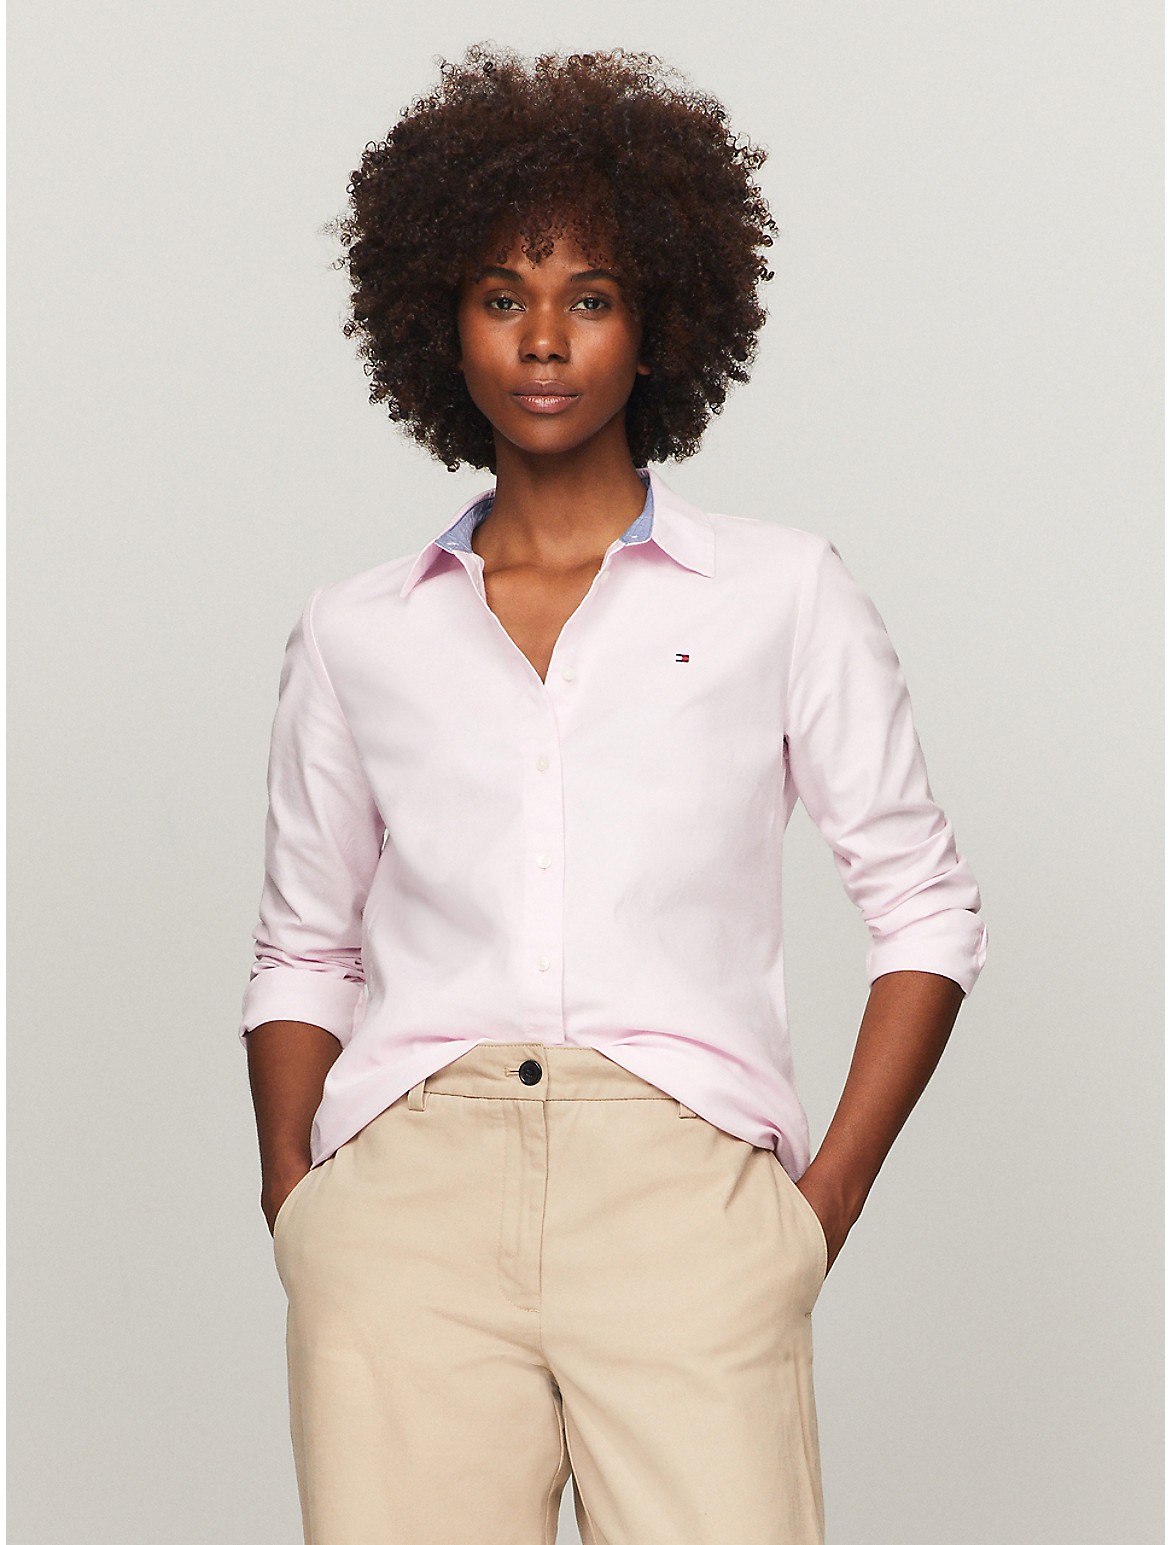 Tommy Hilfiger Women's Regular Fit Solid Stretch Oxford Shirt